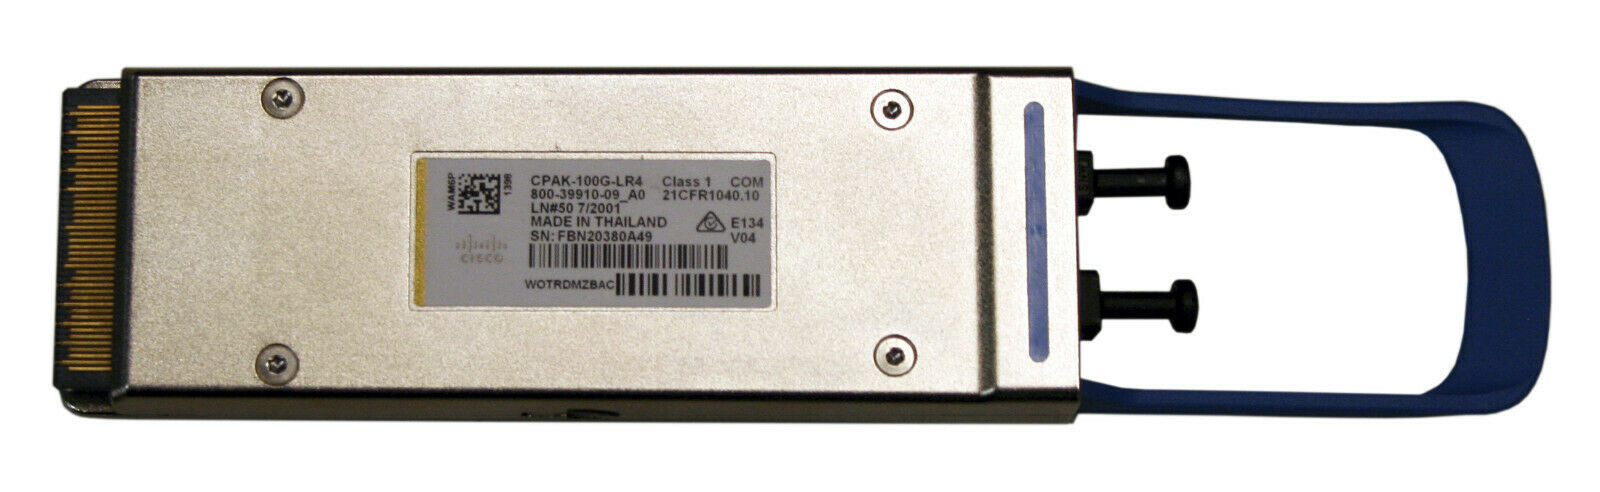 800-39910-09 | Cisco Transceiver Module -100 Gigabit Ethernet,10 Km Smf - NEW